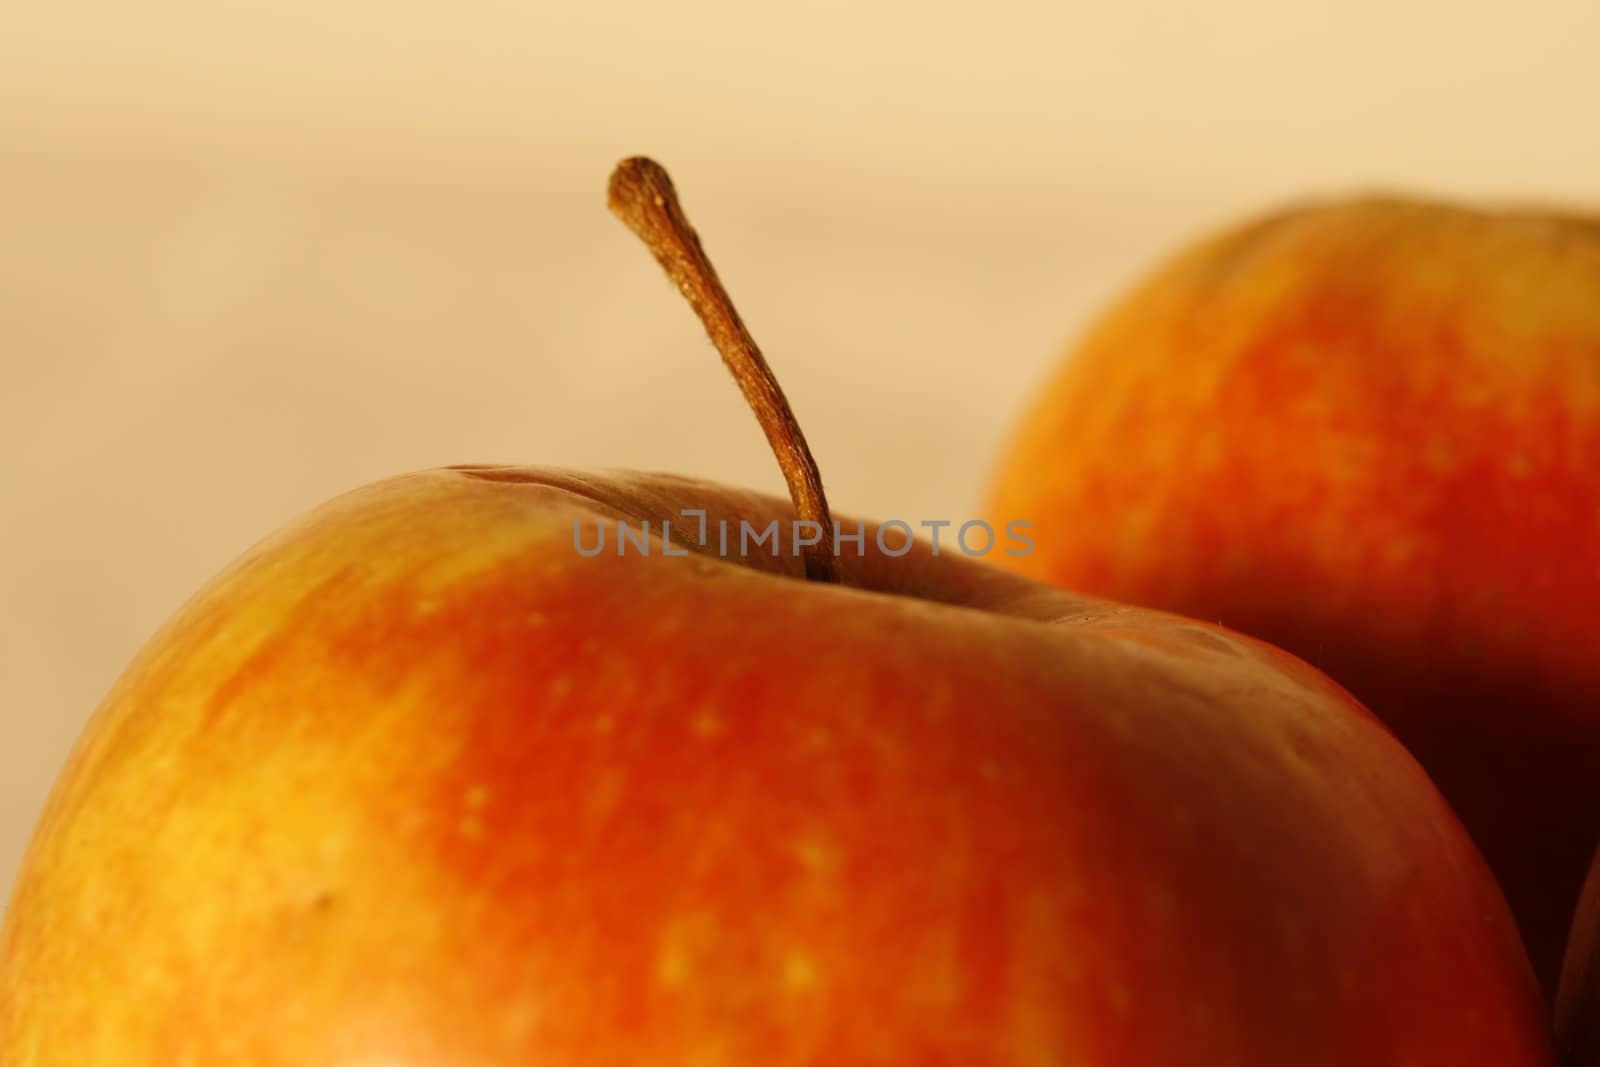 3 apples arranged on a table